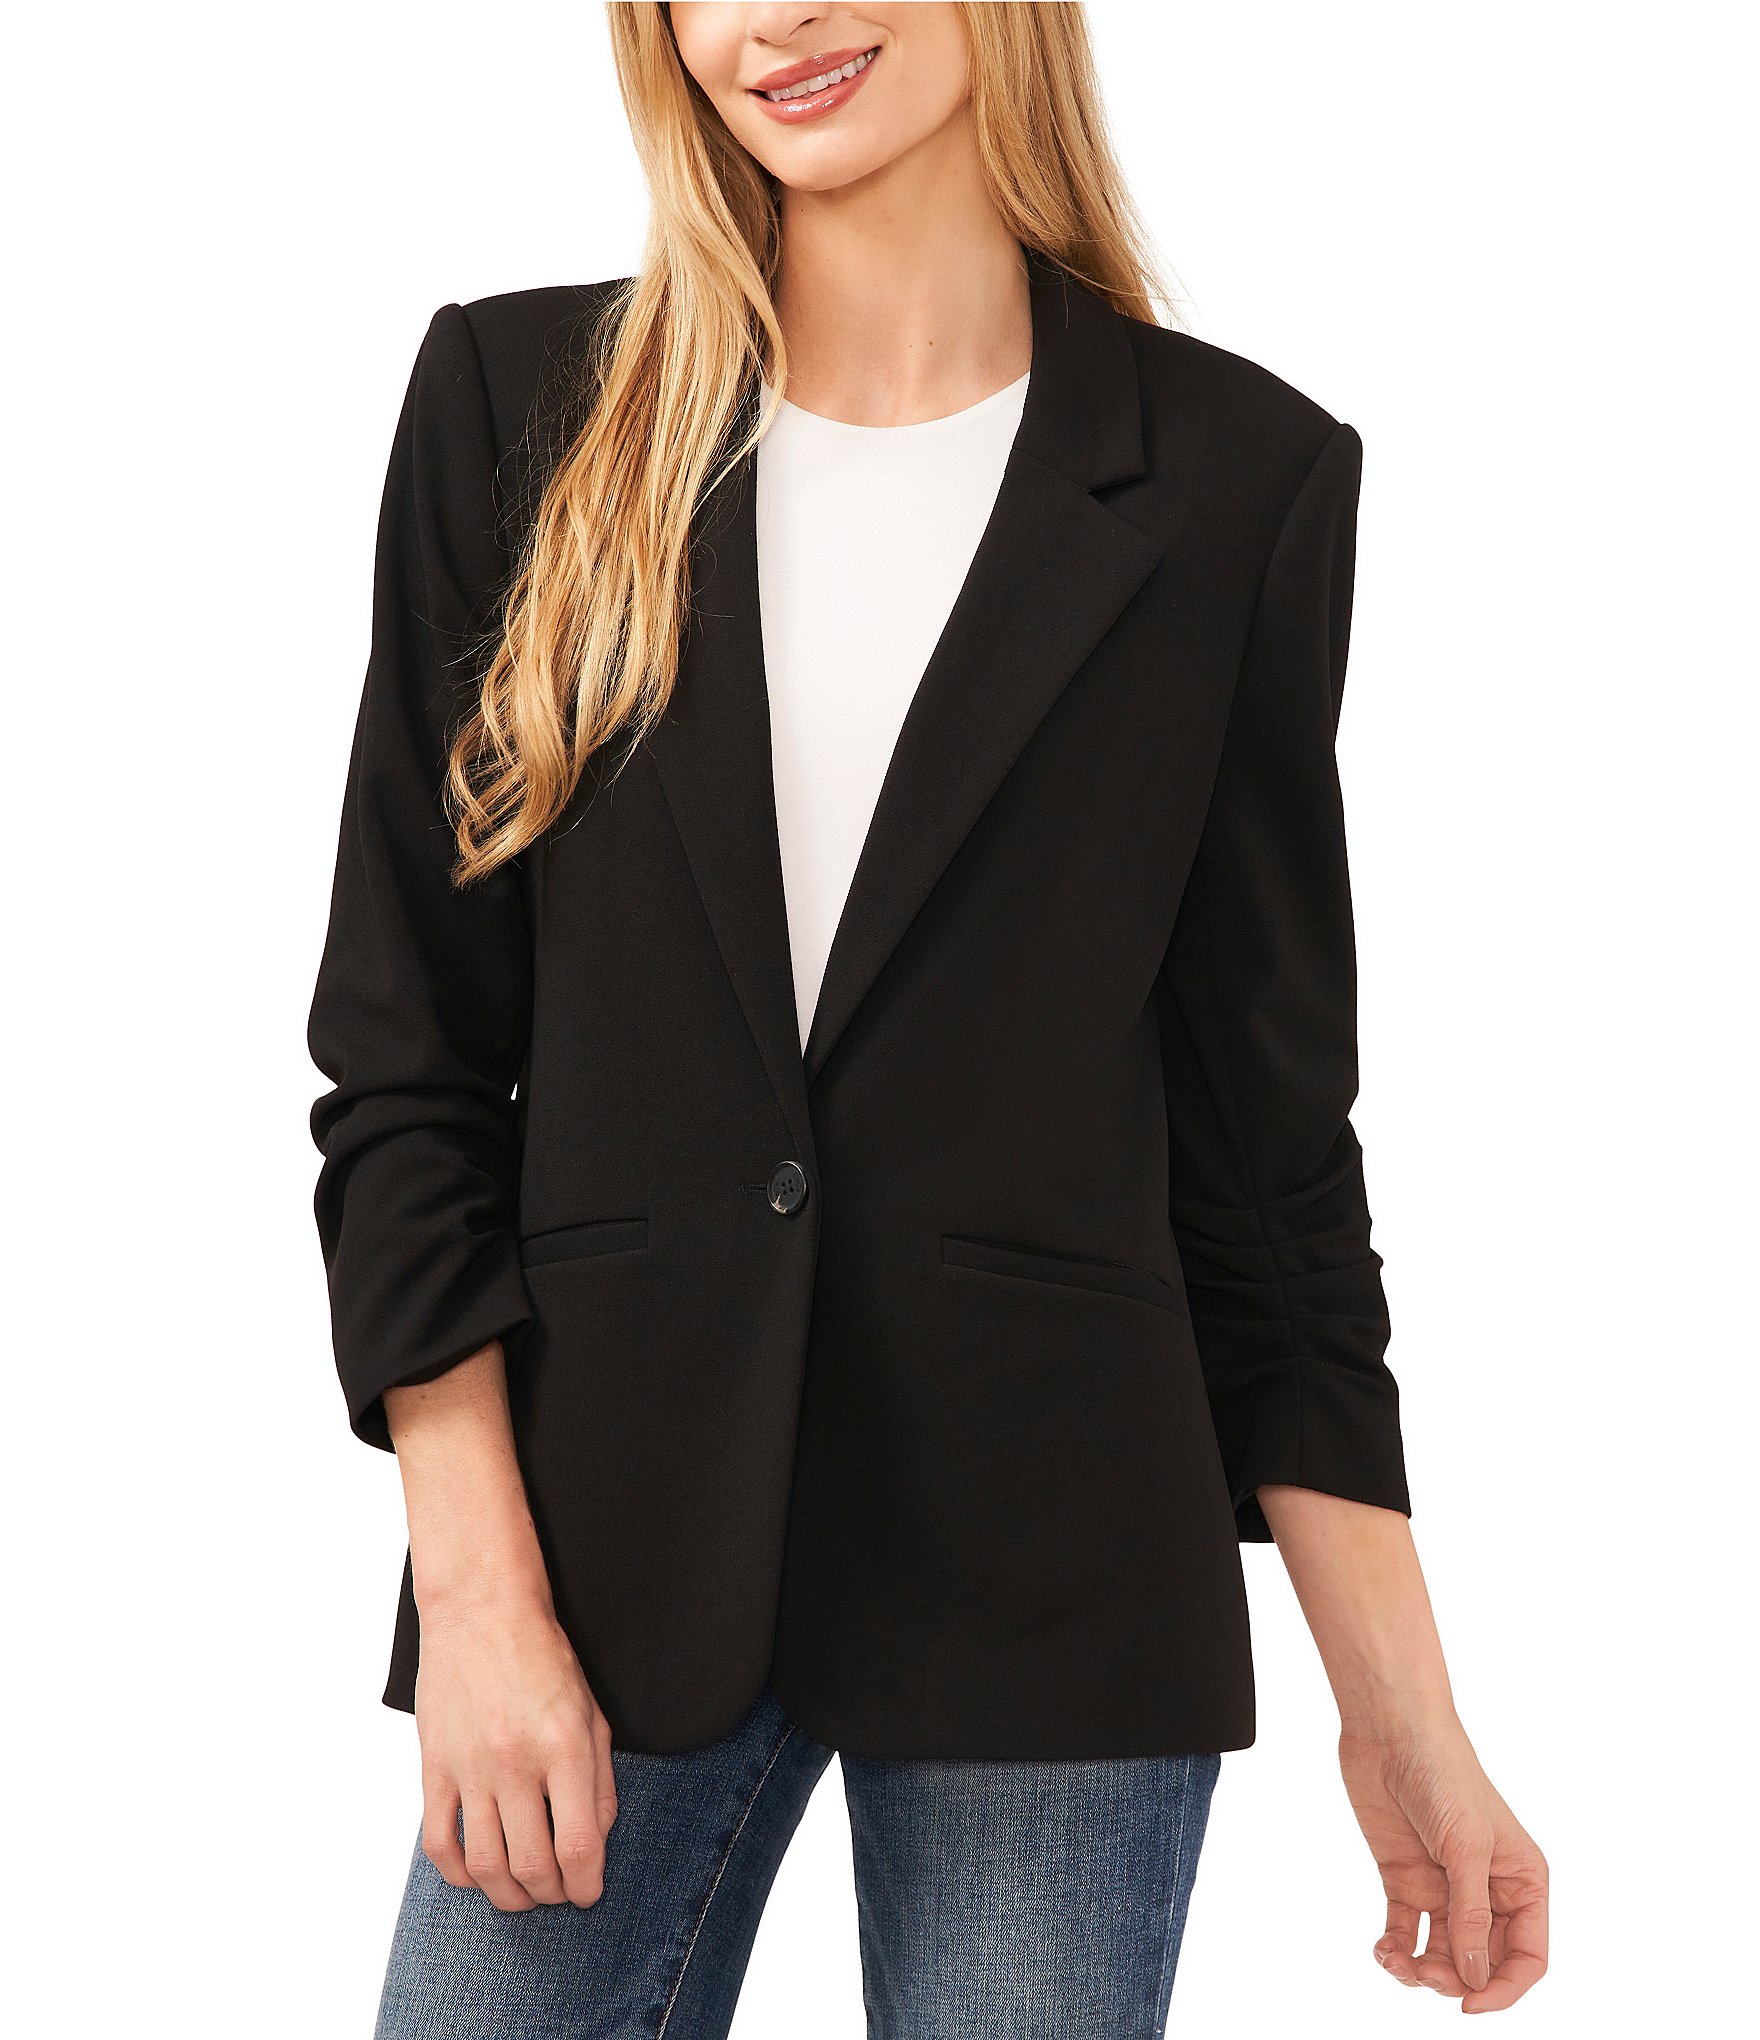 Lapel Neck Single Button Blazer for Women - Elegant Plain Long